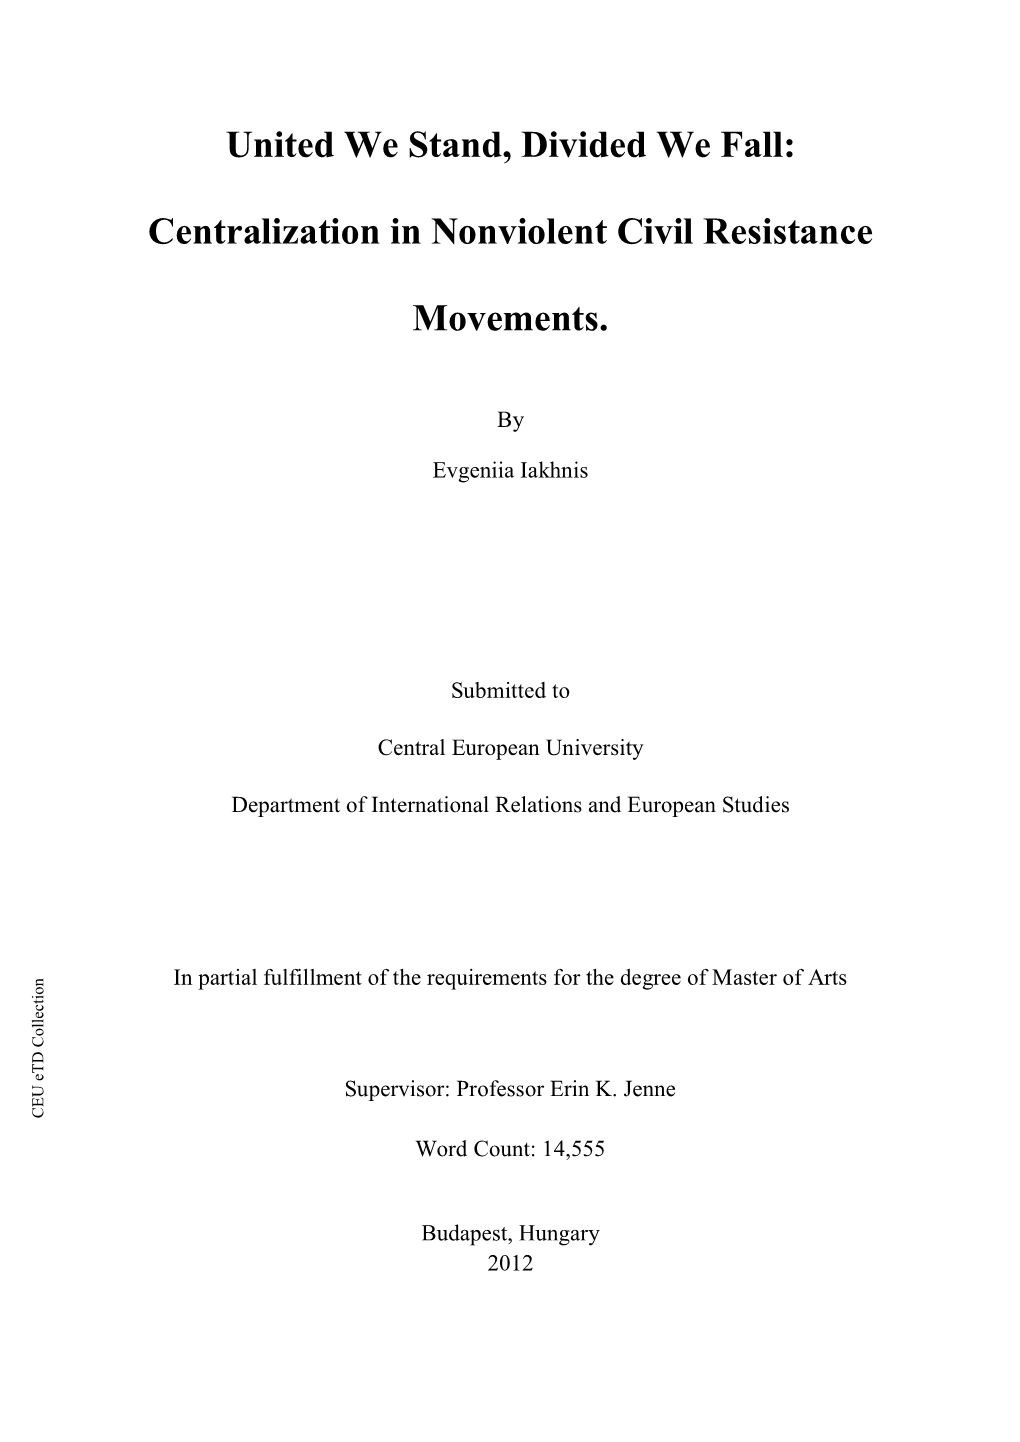 Centralization in Nonviolent Civil Resistance Movements